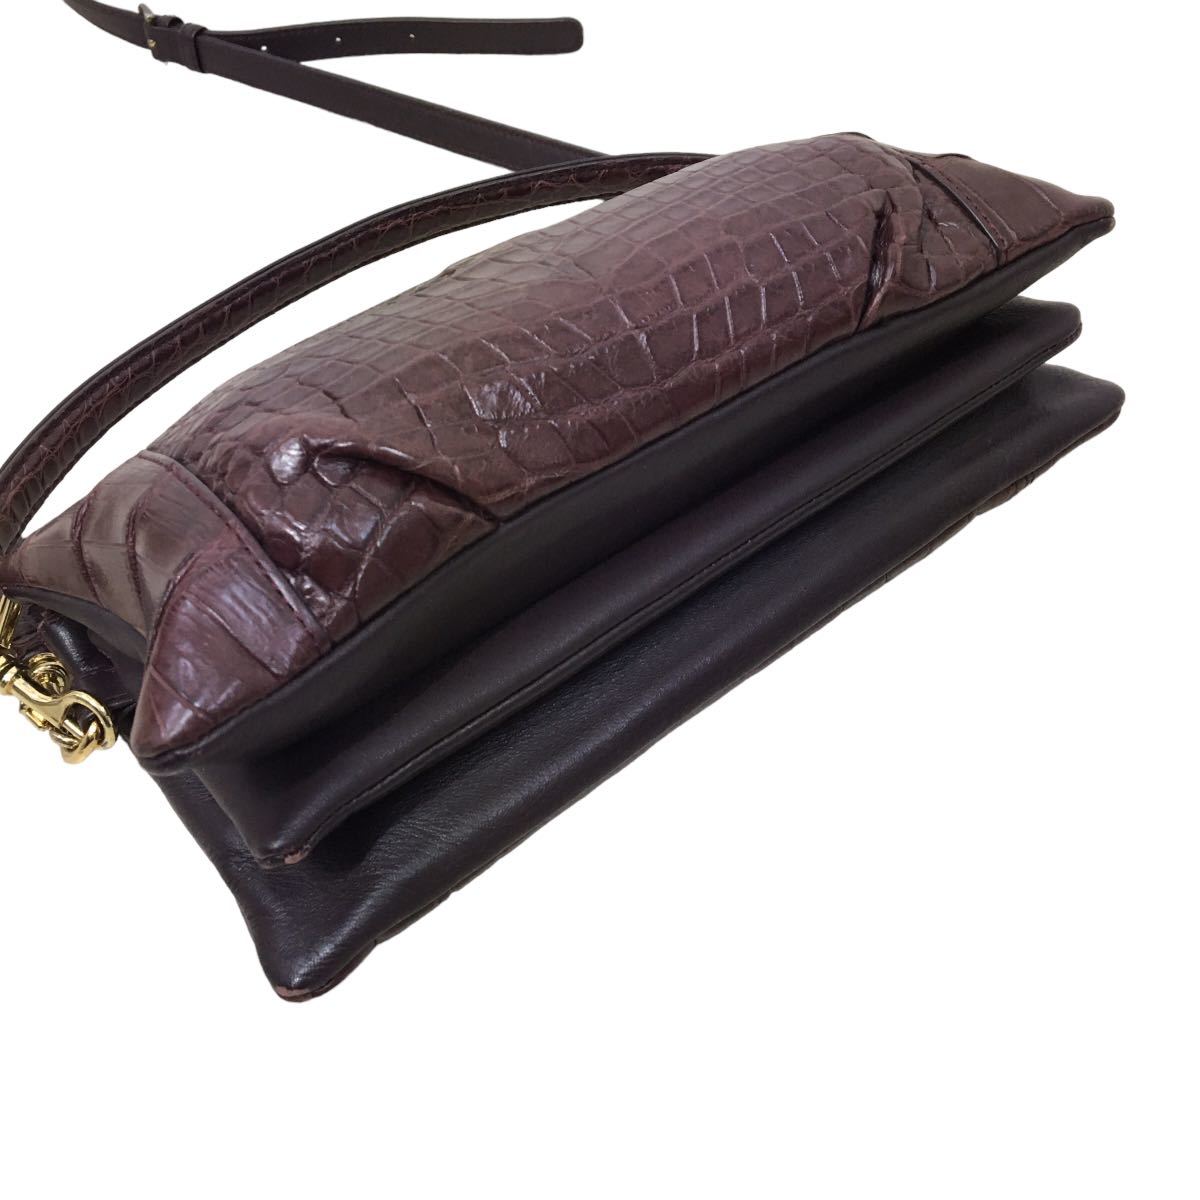 D491 クロコダイル クロコ 本革 レザー 皮革 ショルダーバッグ 肩掛け 斜め掛け かばん カバン 鞄 バッグ BAG ミニバッグ ブラウン系の画像5